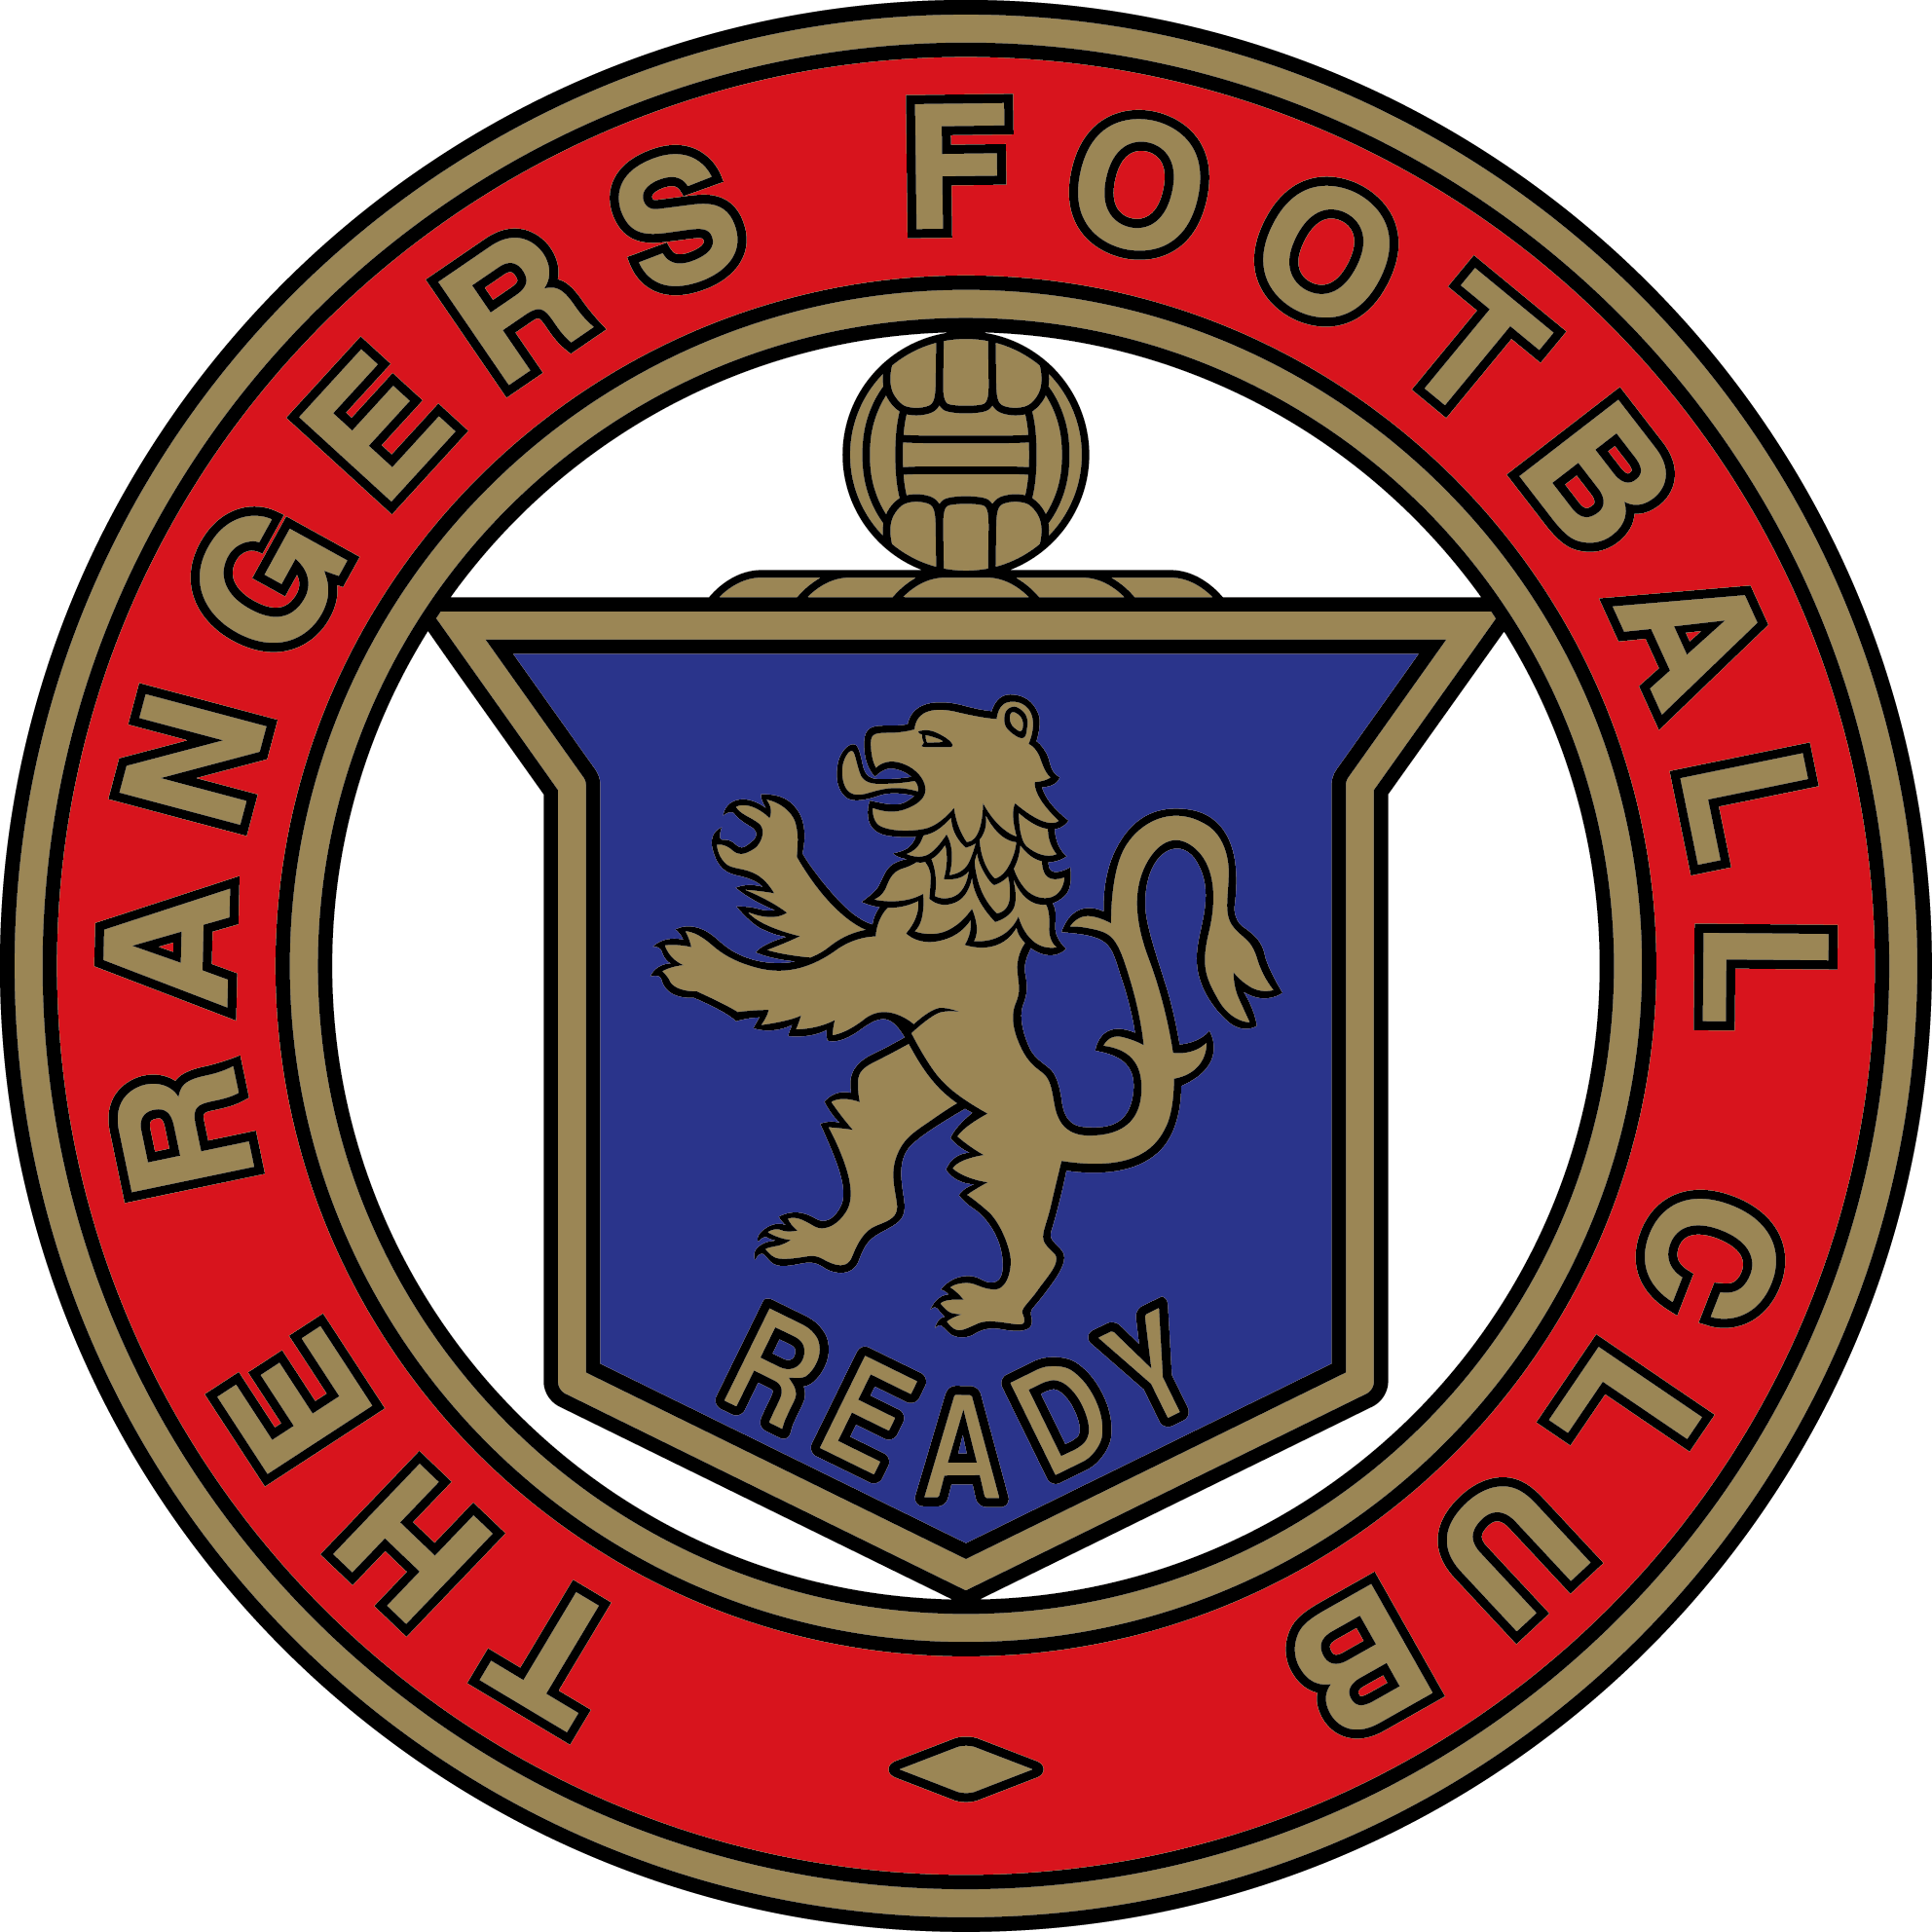 Fc Glasgow Rangers - Rangers Football Club (1984x1984)